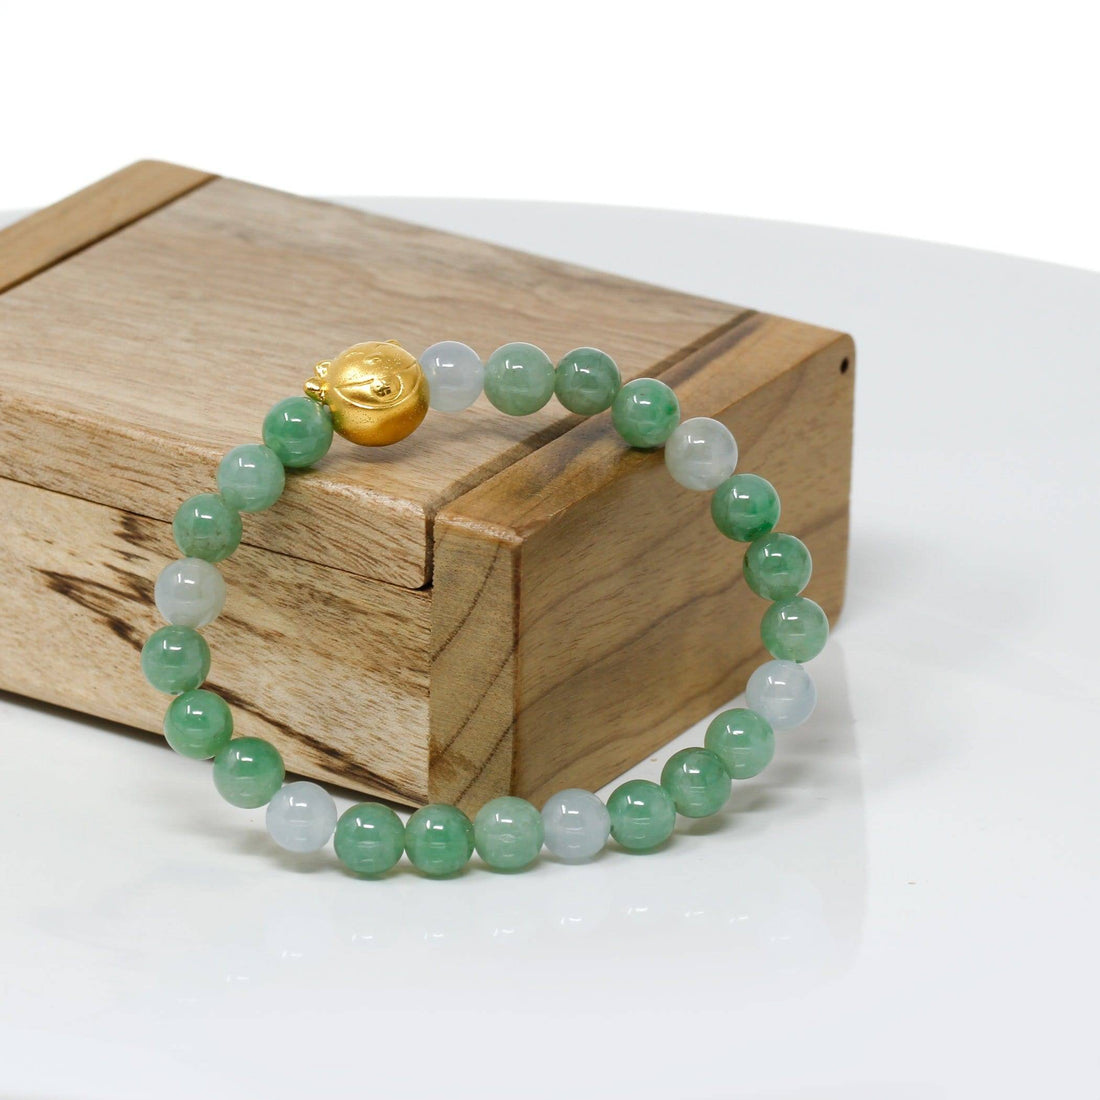 Baikalla Jewelry 24k Gold Jadeite Beads Bracelet XS 6 Inches Genuine High-quality Jade Jadeite Bracelet Bangle with 24k Yellow Gold Cat Charm #414